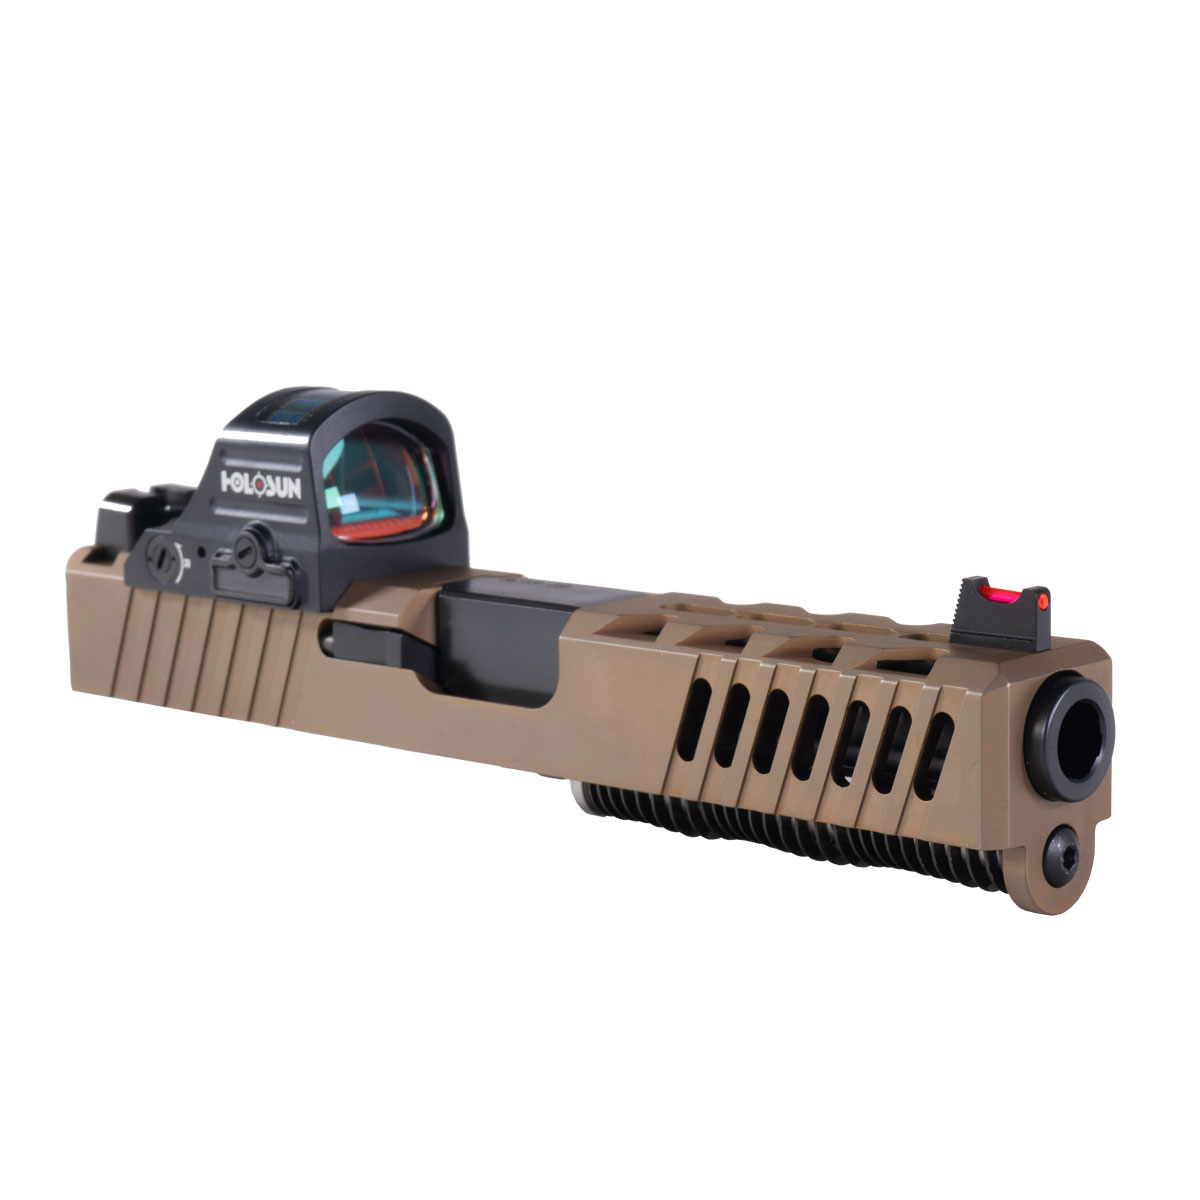 OTD 'Copperhead' 9mm Complete Slide Kit - Glock 19 Compatible